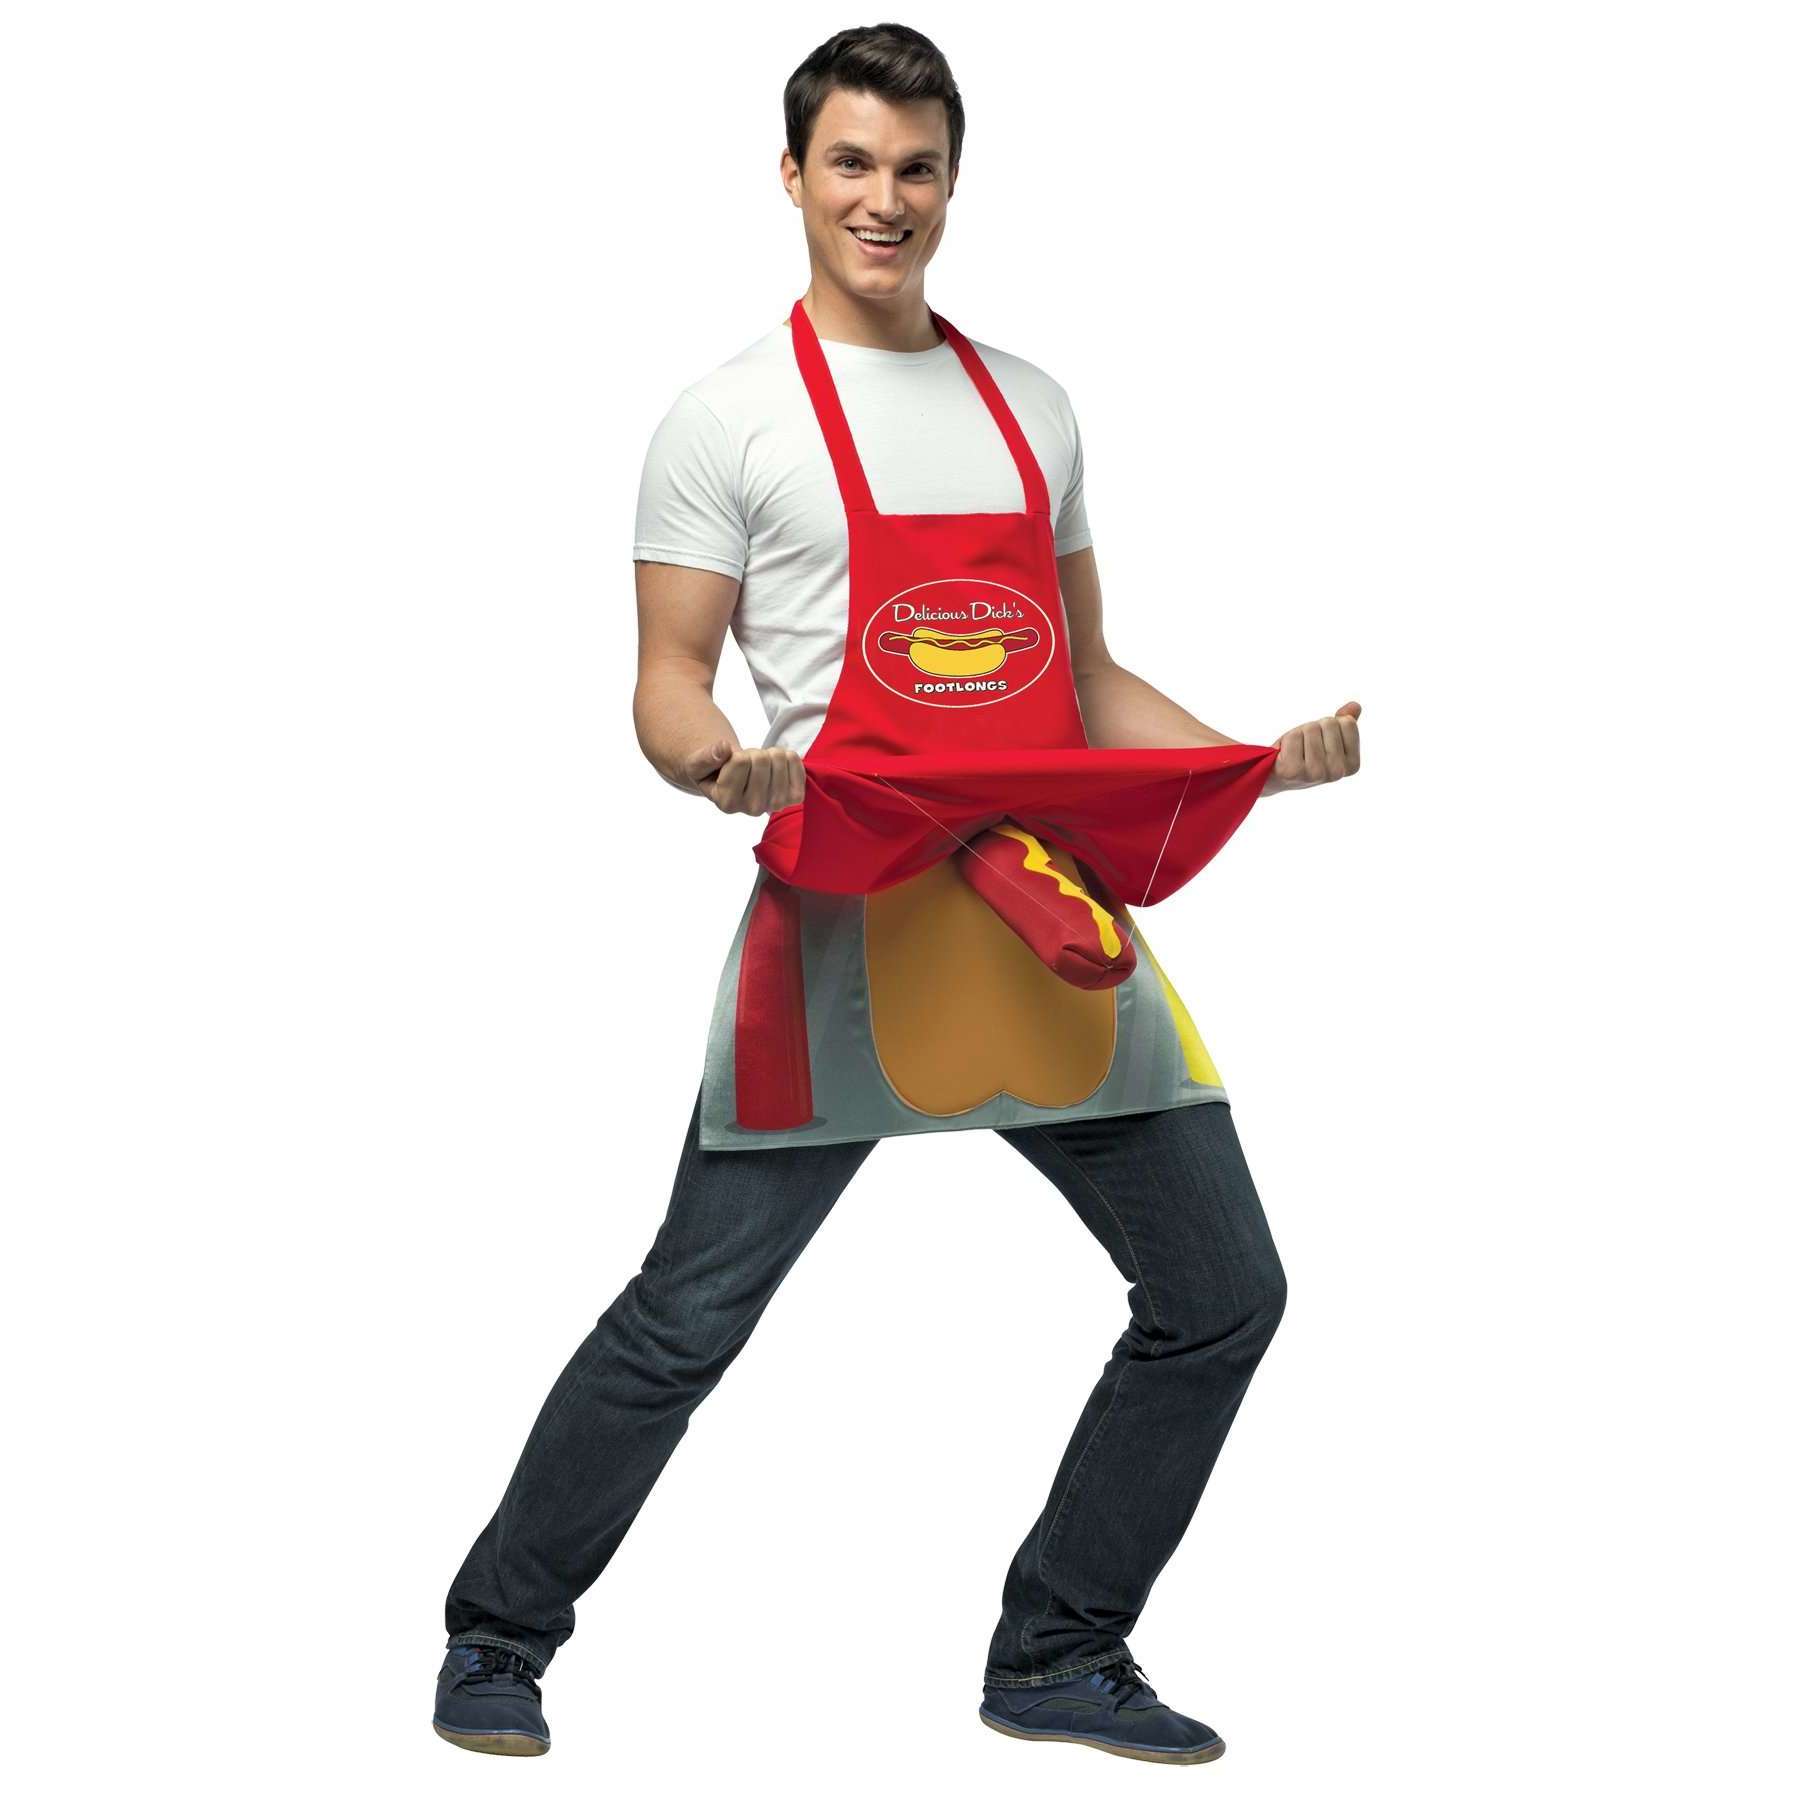 Hot Dog Vendor Dirty Apron Adult Costume